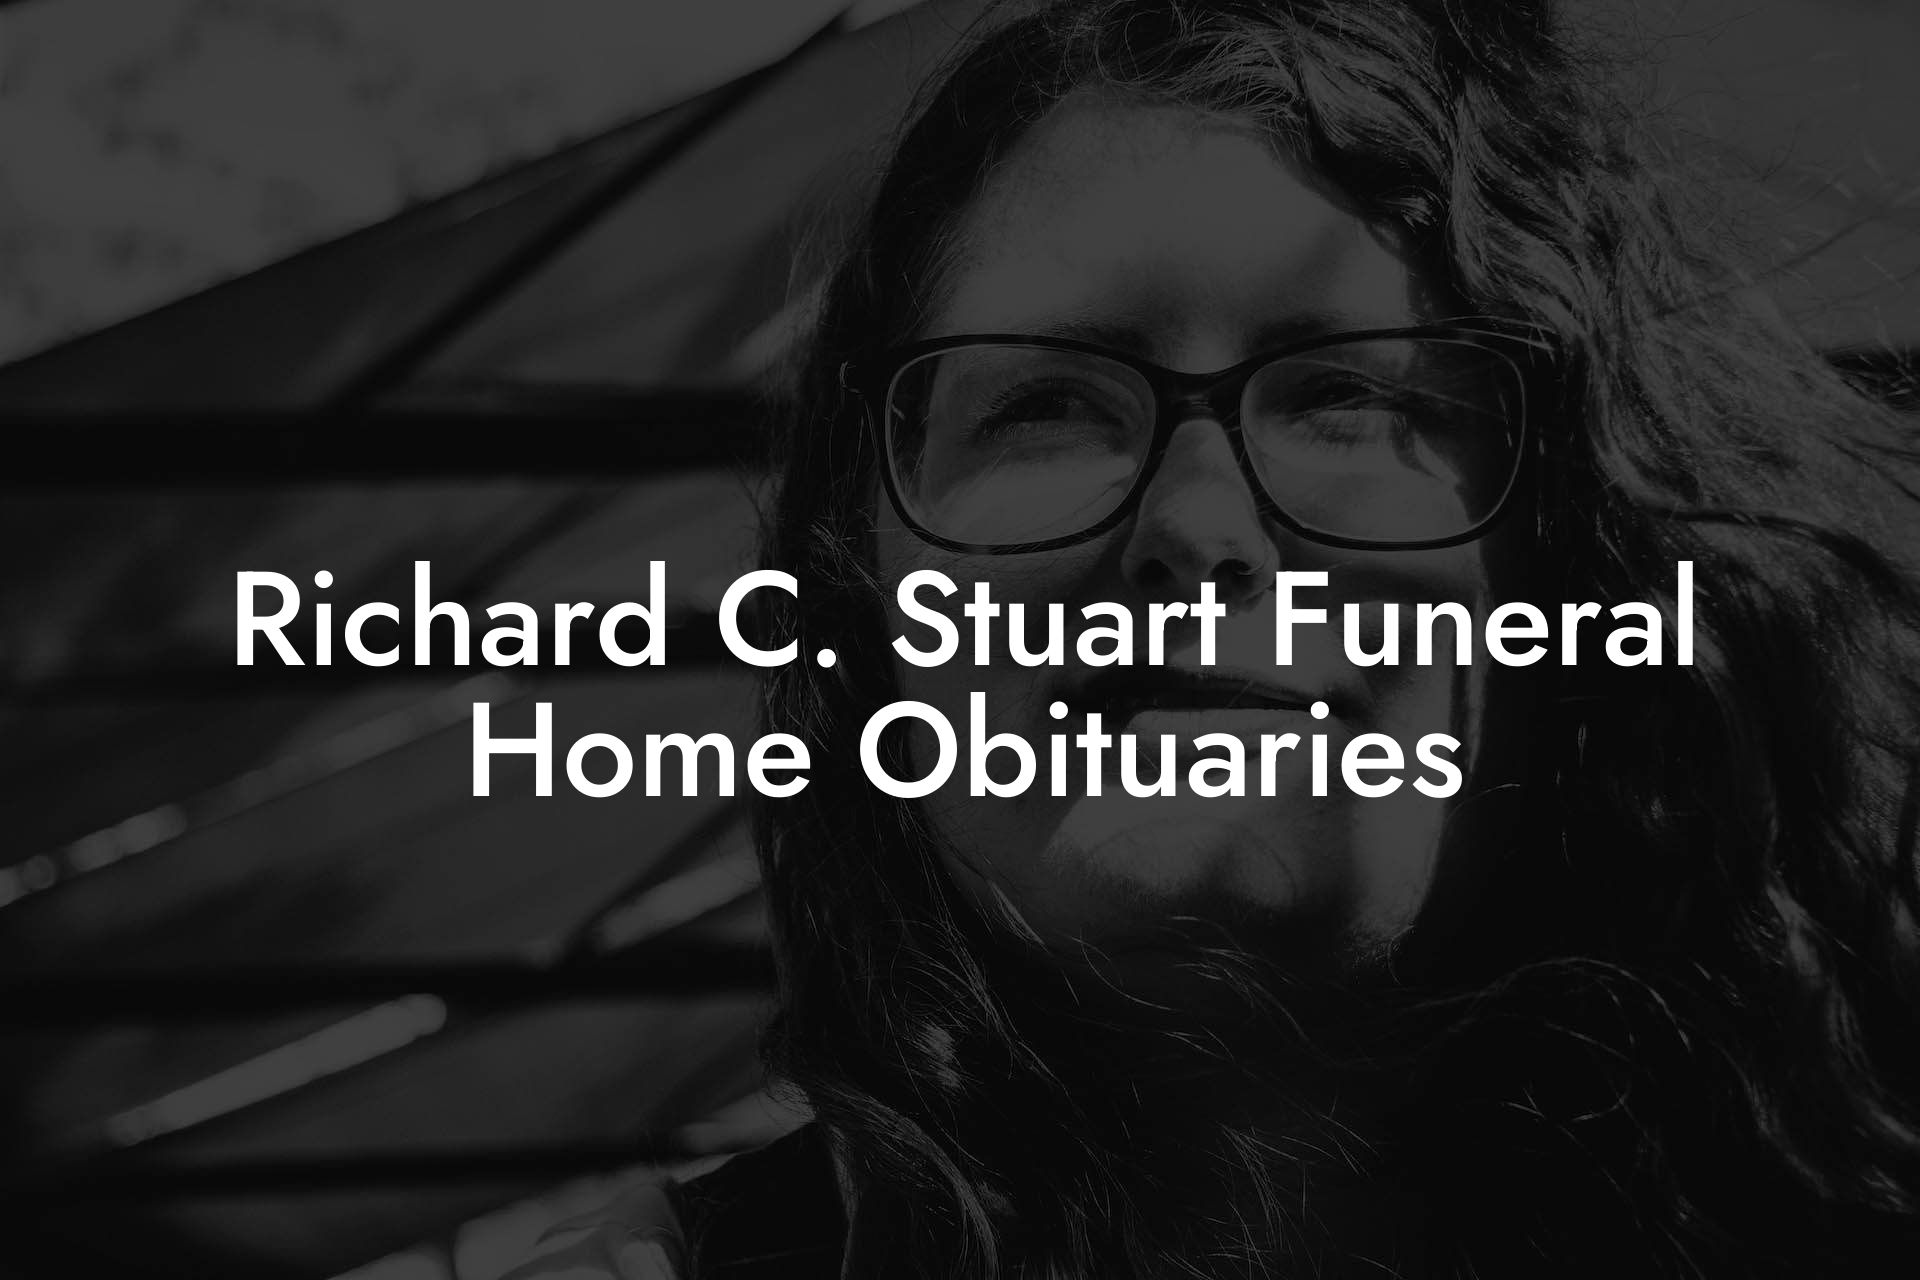 Richard C. Stuart Funeral Home Obituaries